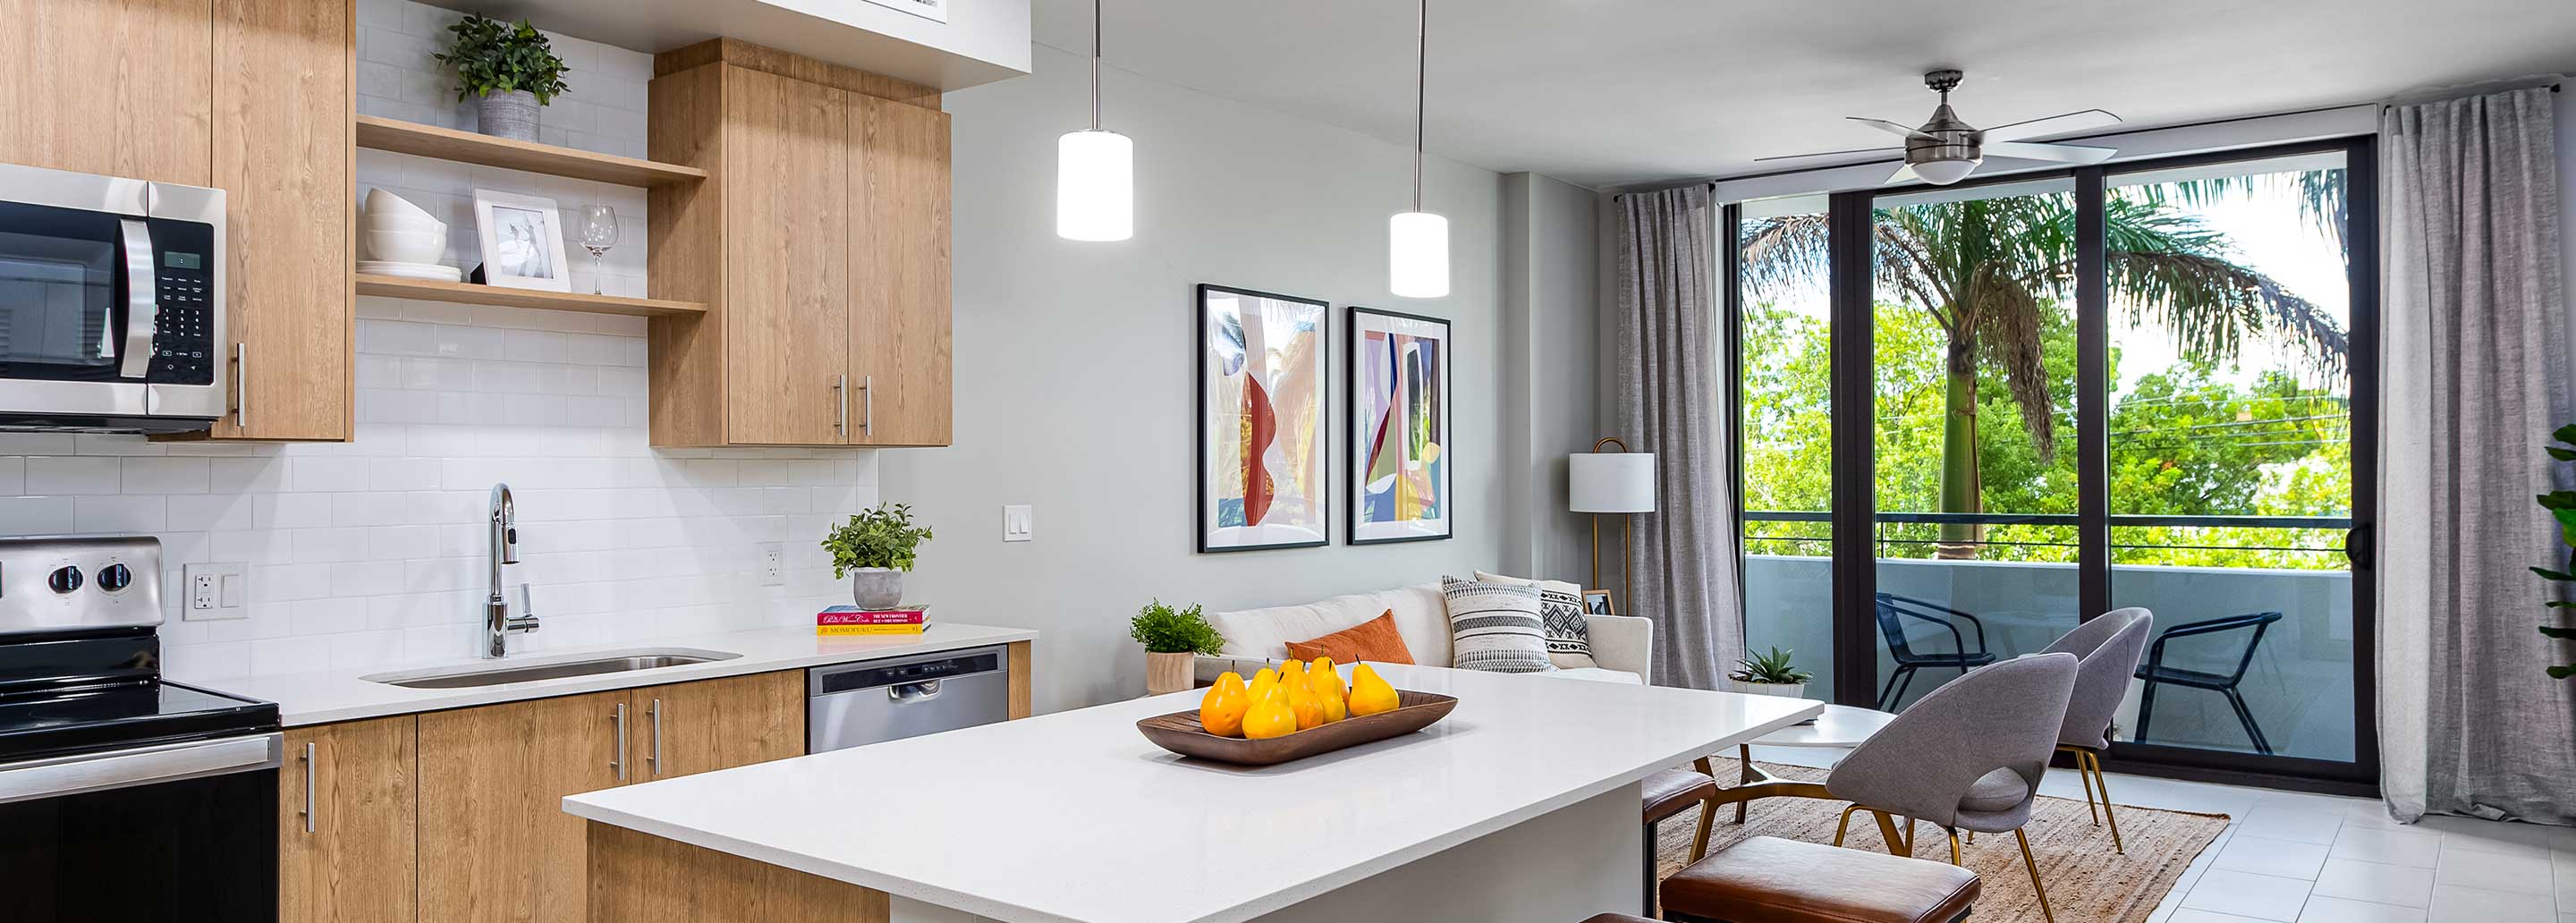 Open concept kitchen with quartz countertop, island, stainless steel appliances and tile backsplash